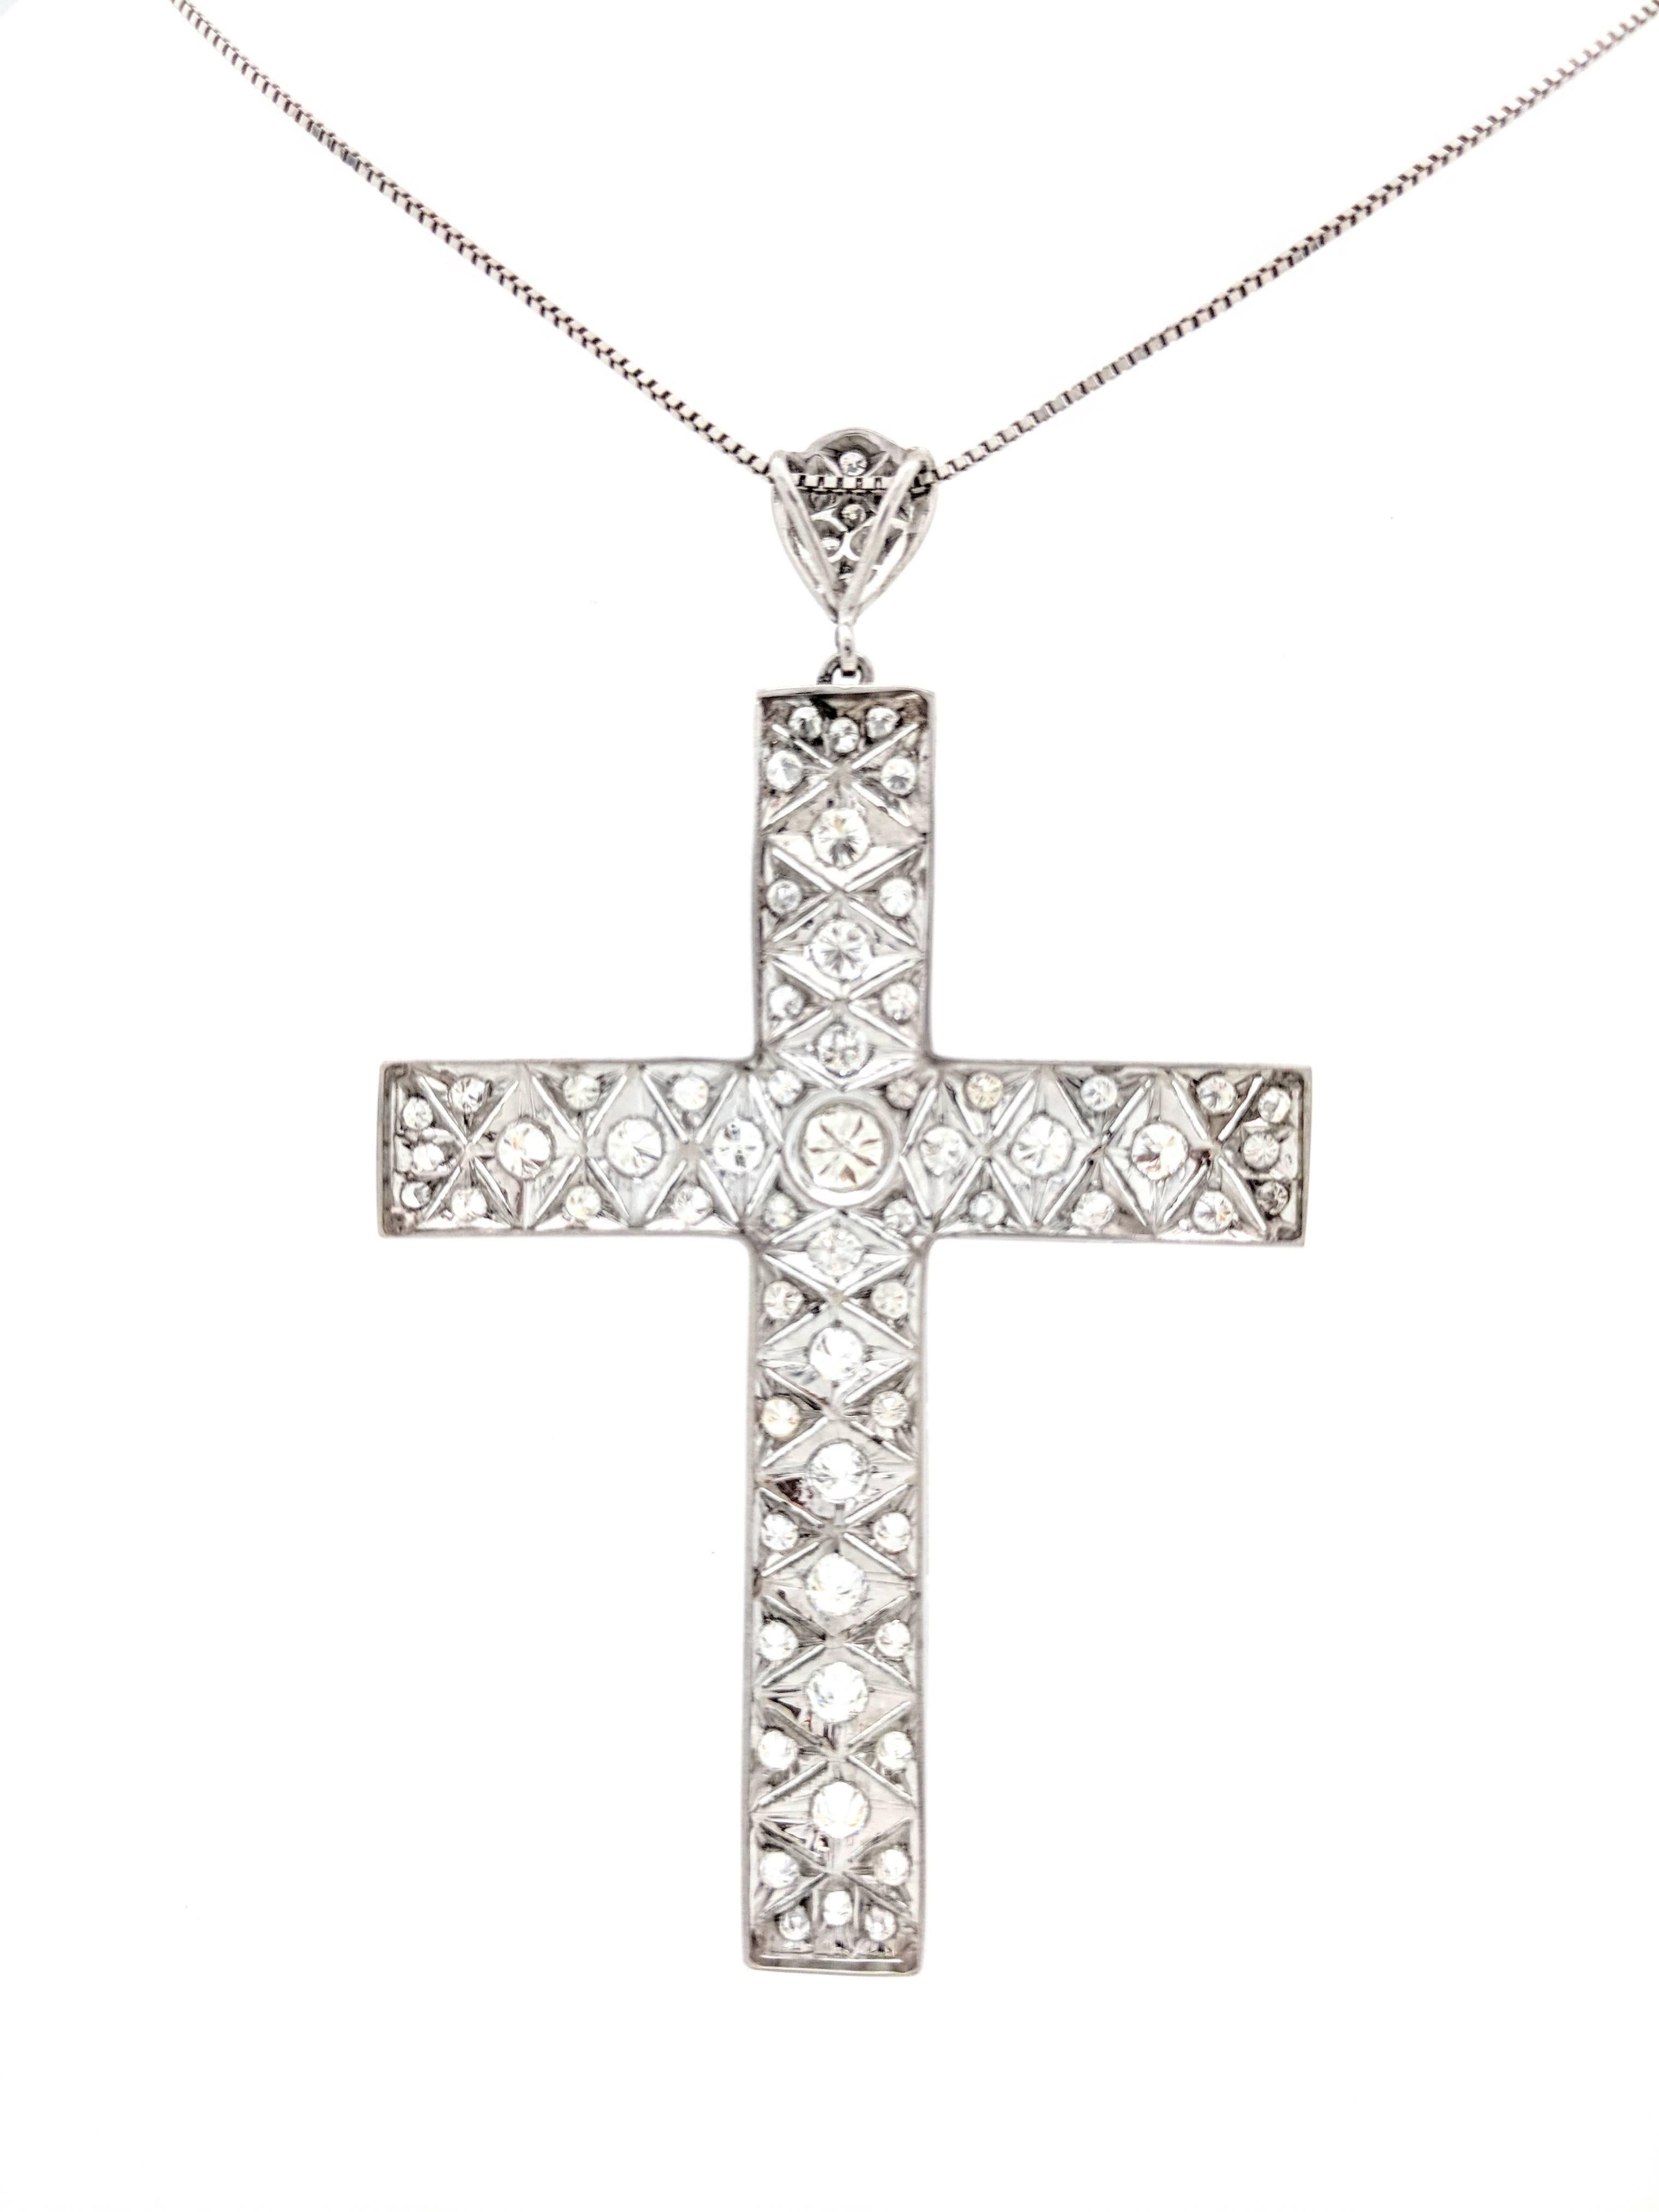 Art Deco Filigree Platinum Diamond Cross Pendant Necklace 3.03ctw For Sale 2